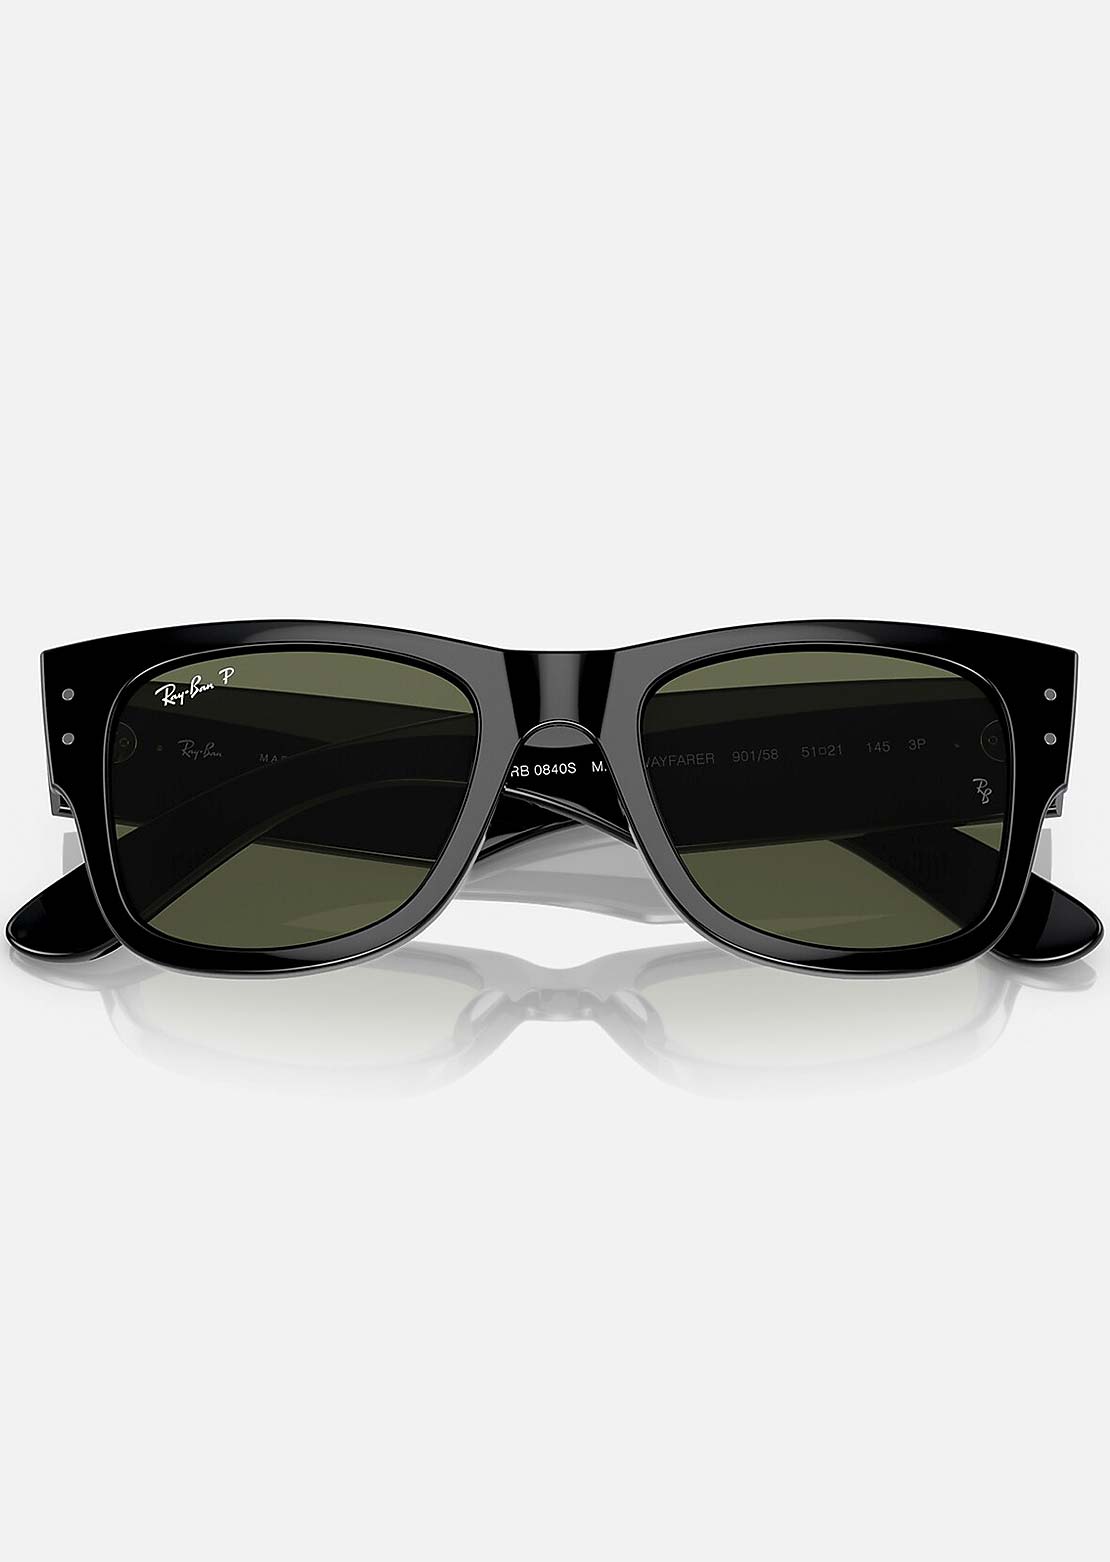 Ray-Ban Mega Wayfarer Sunglasses Black